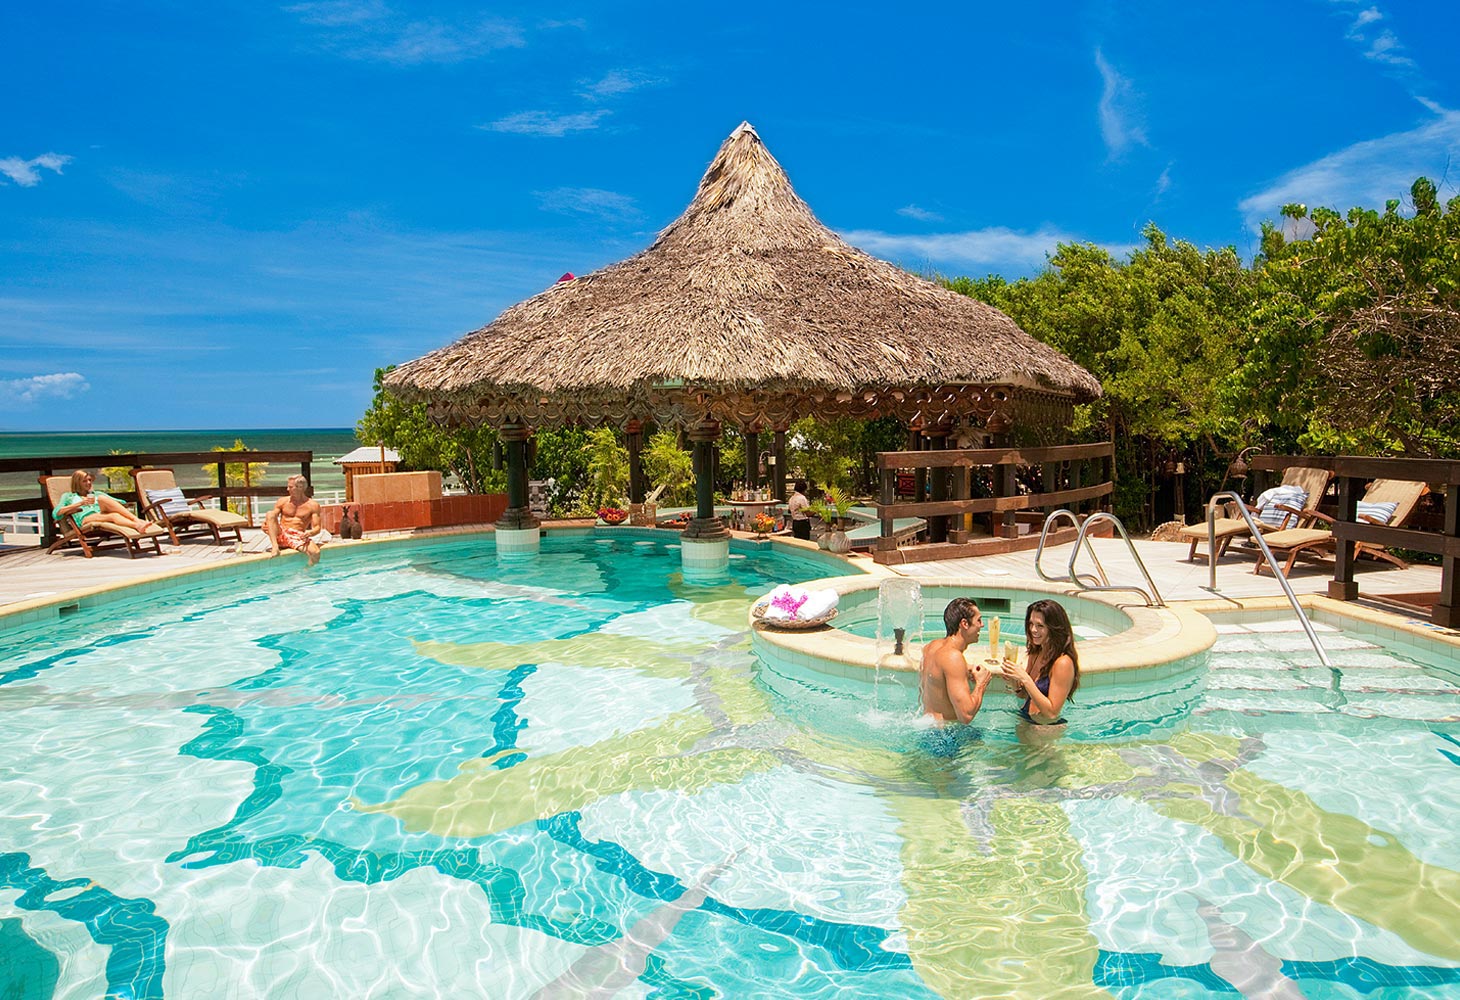 31/137. Sandals Royal Caribbean Resort & Private Island. 